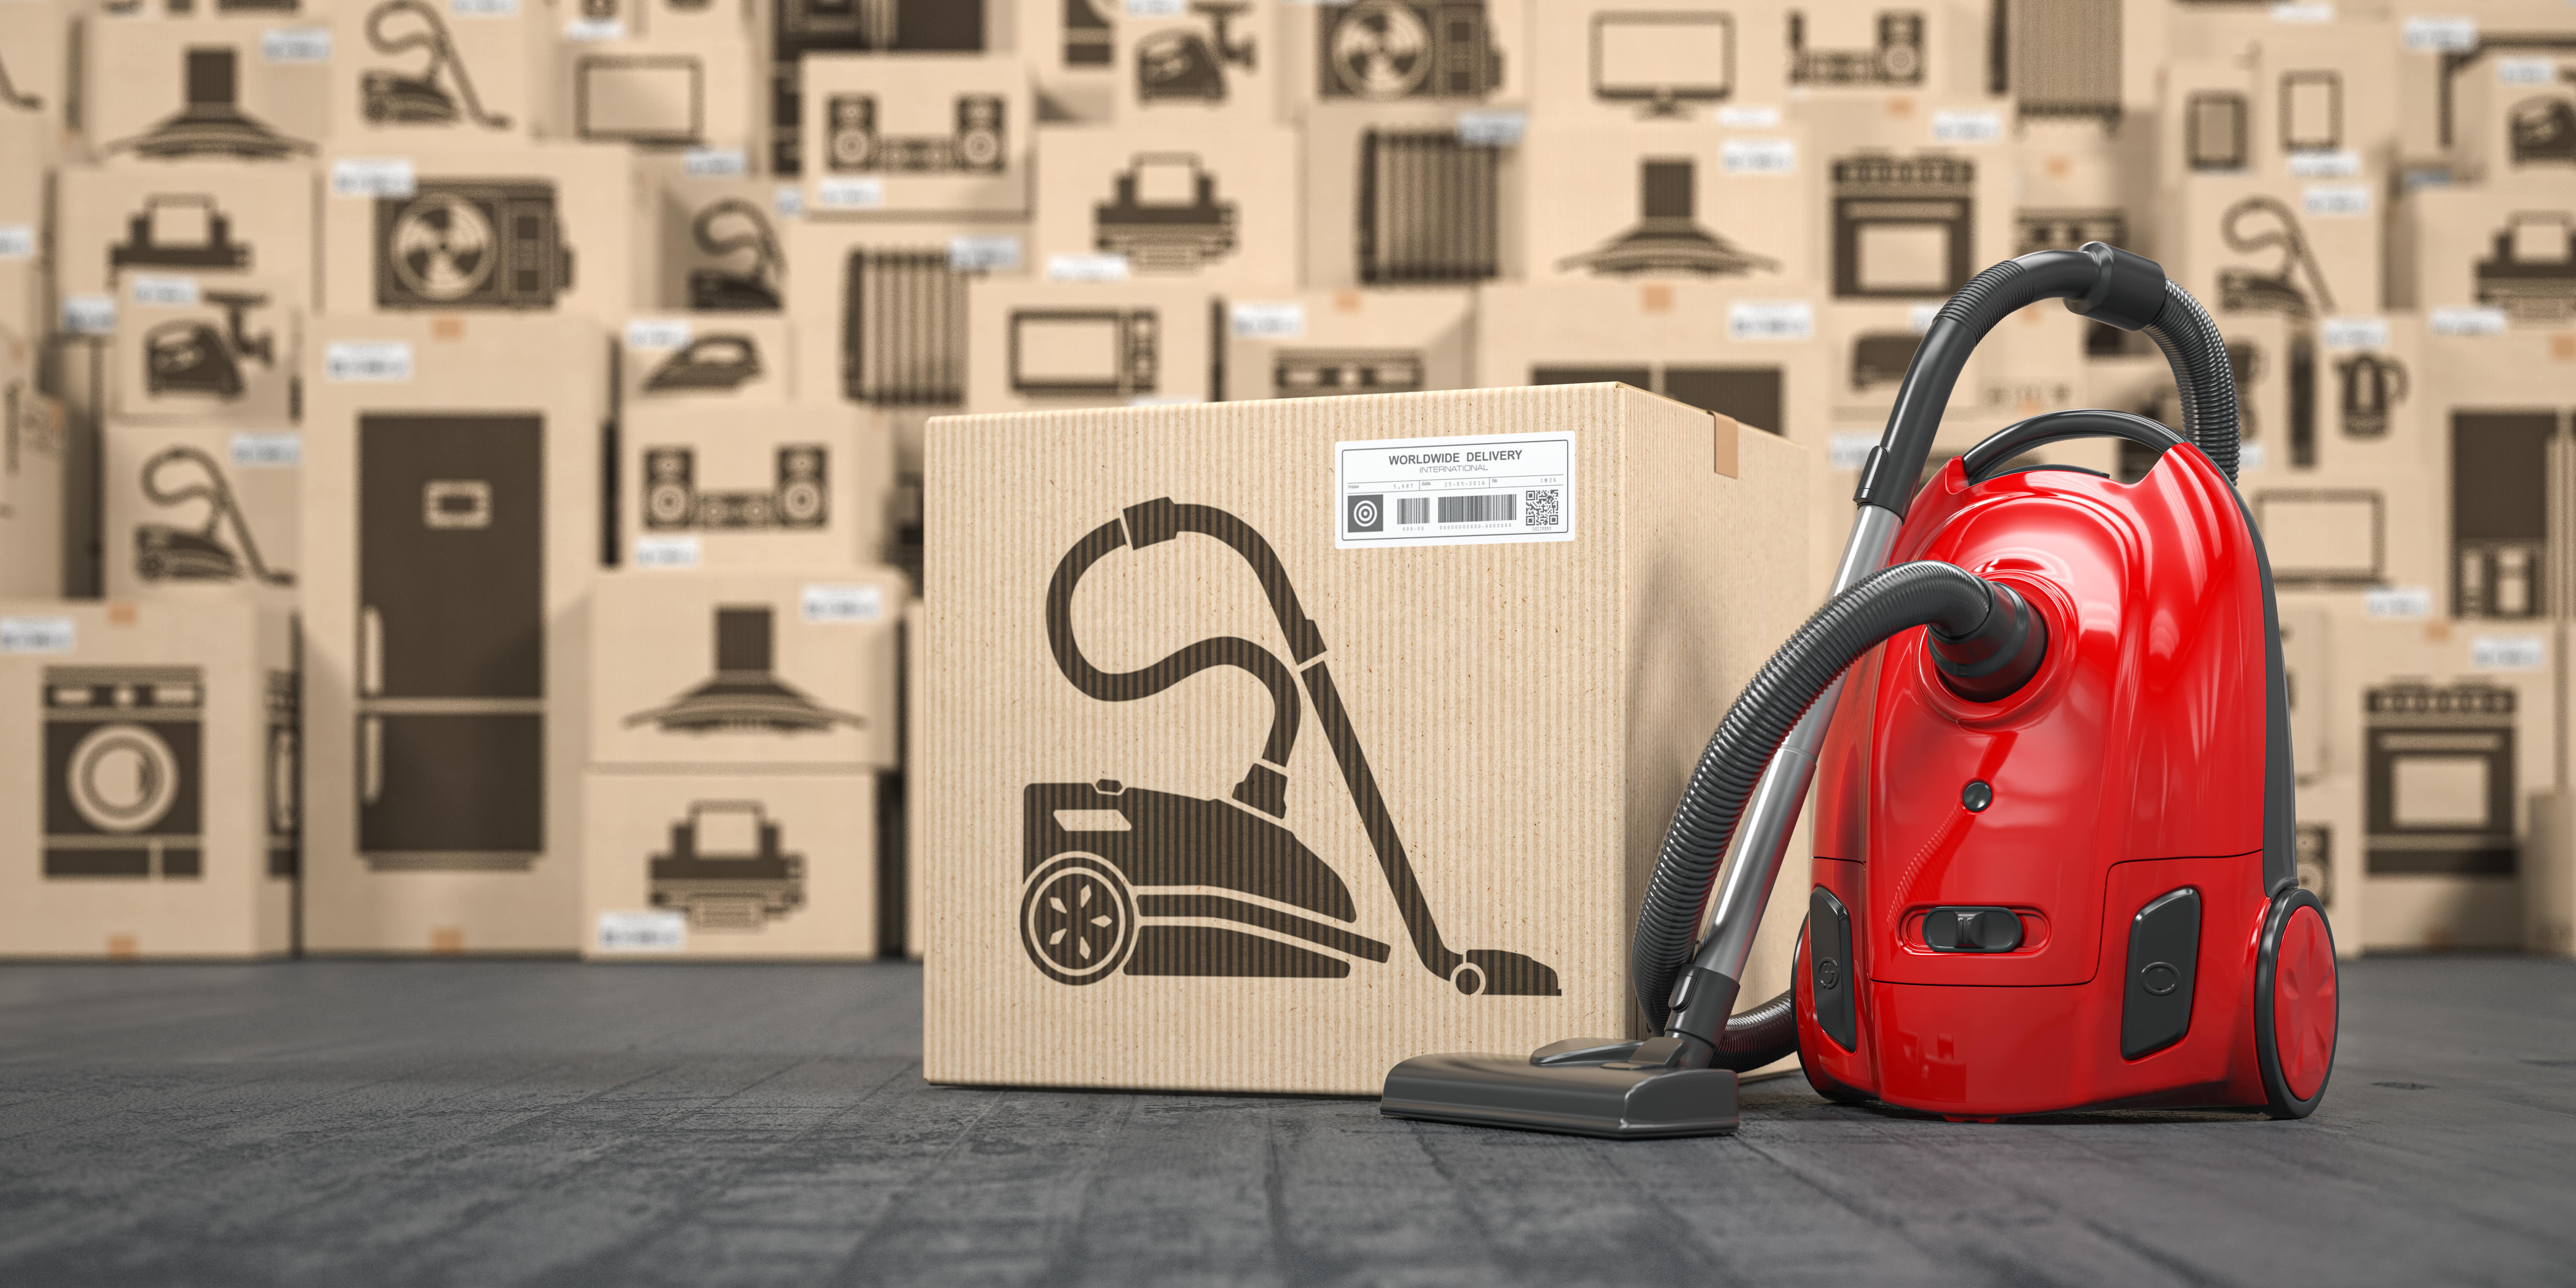 vacuum-cleaner-in-warehouse-with-household-applian-PTUK6LR-min-jpg-1